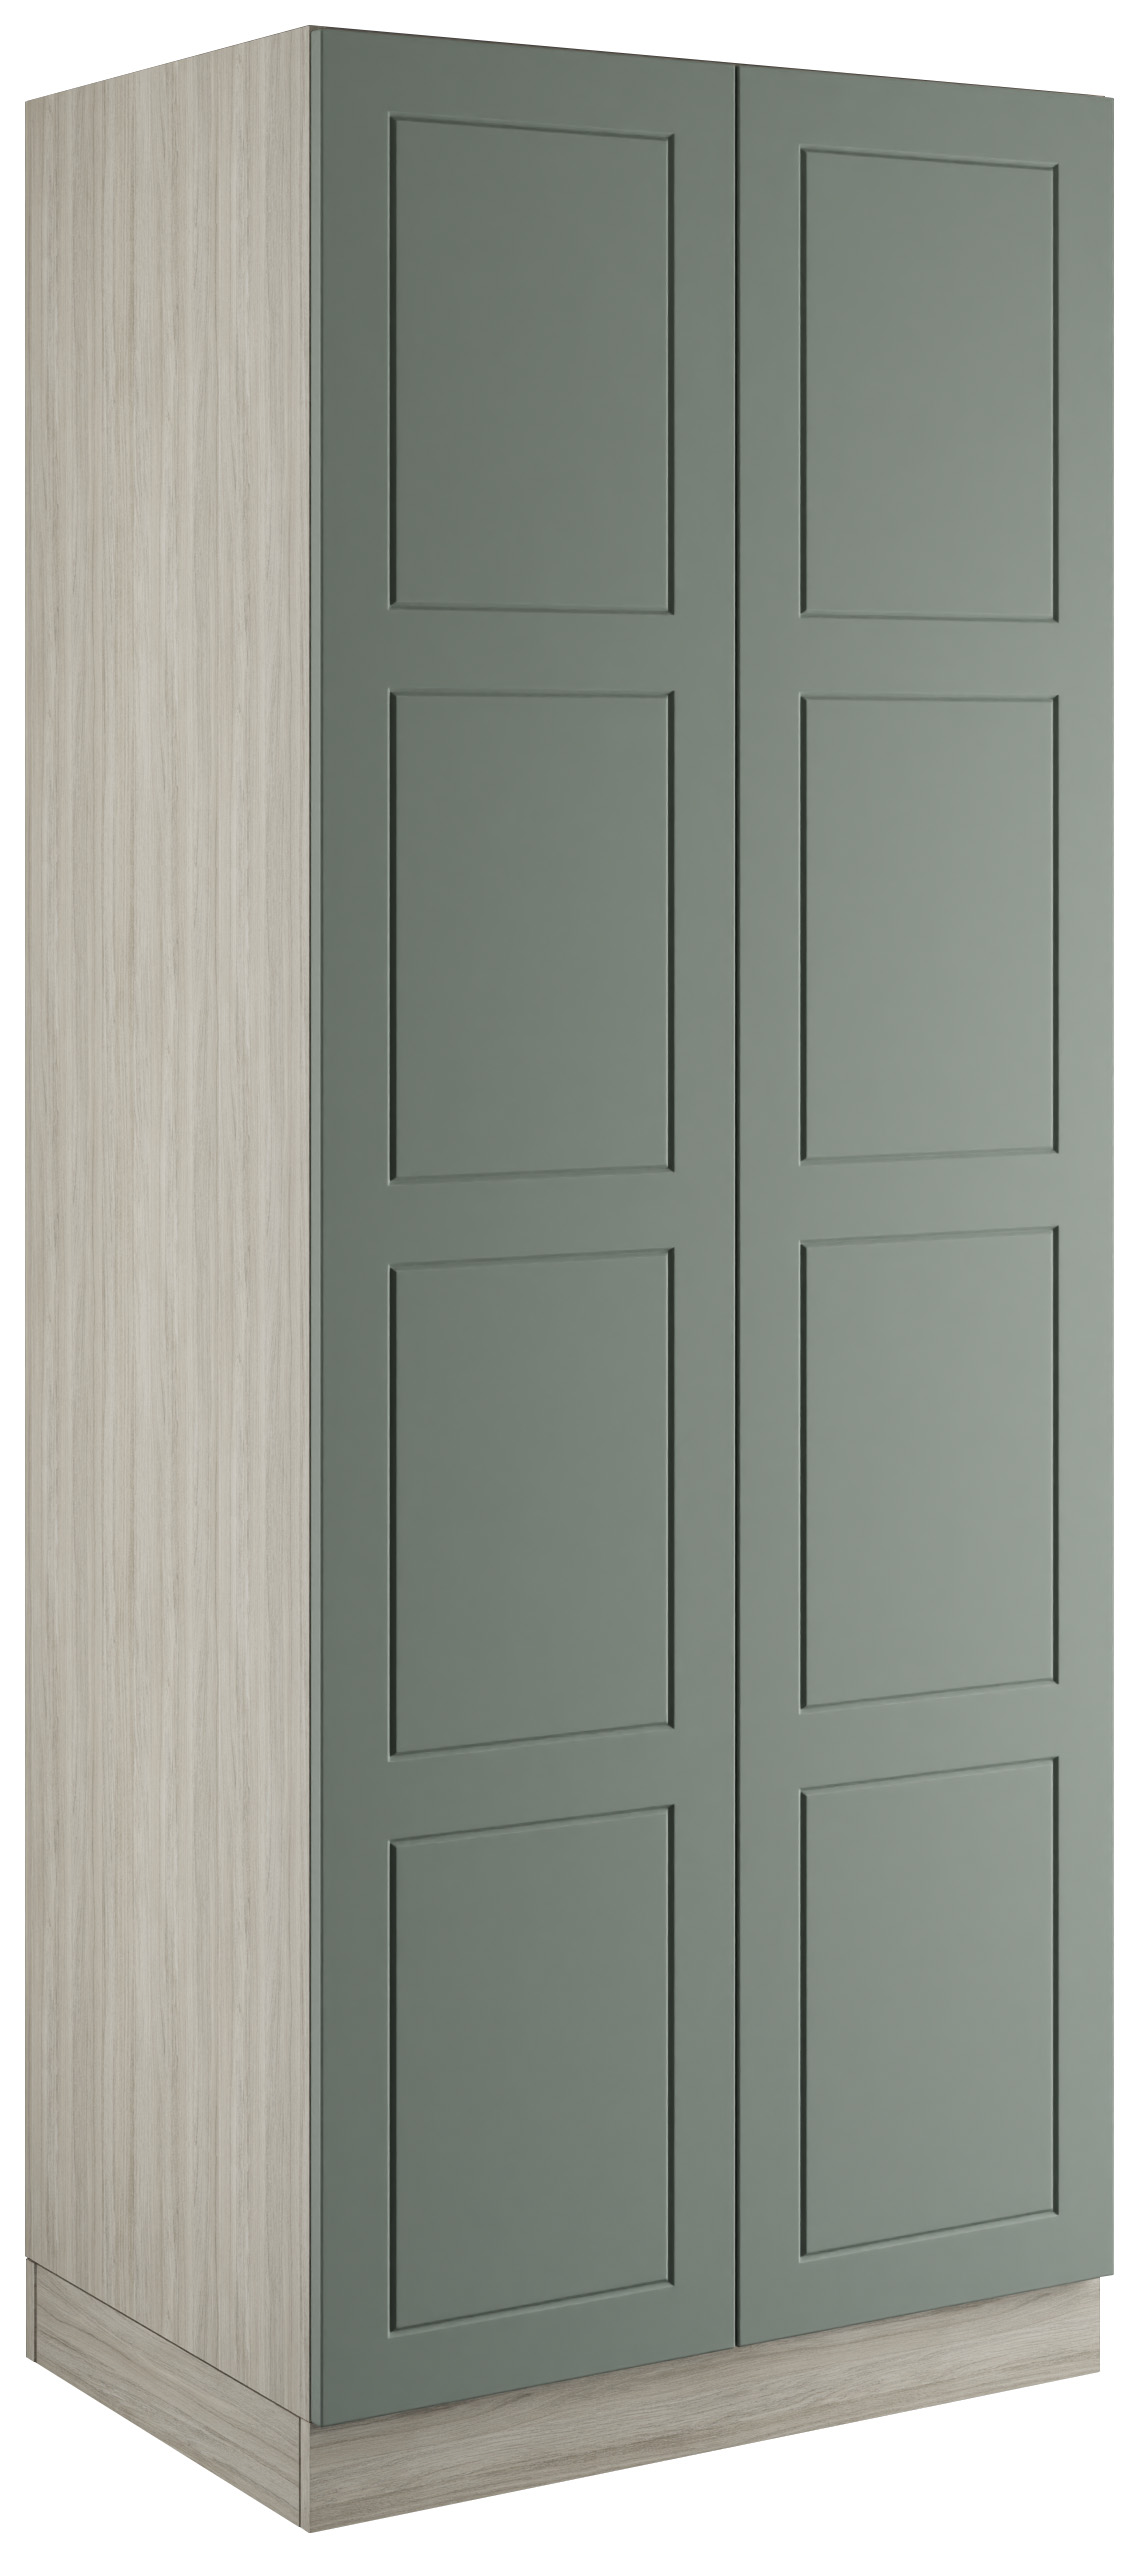 Bramham Sage Green Double Wardrobe with Single Rail & Shelves - 900 x 2260 x 608mm